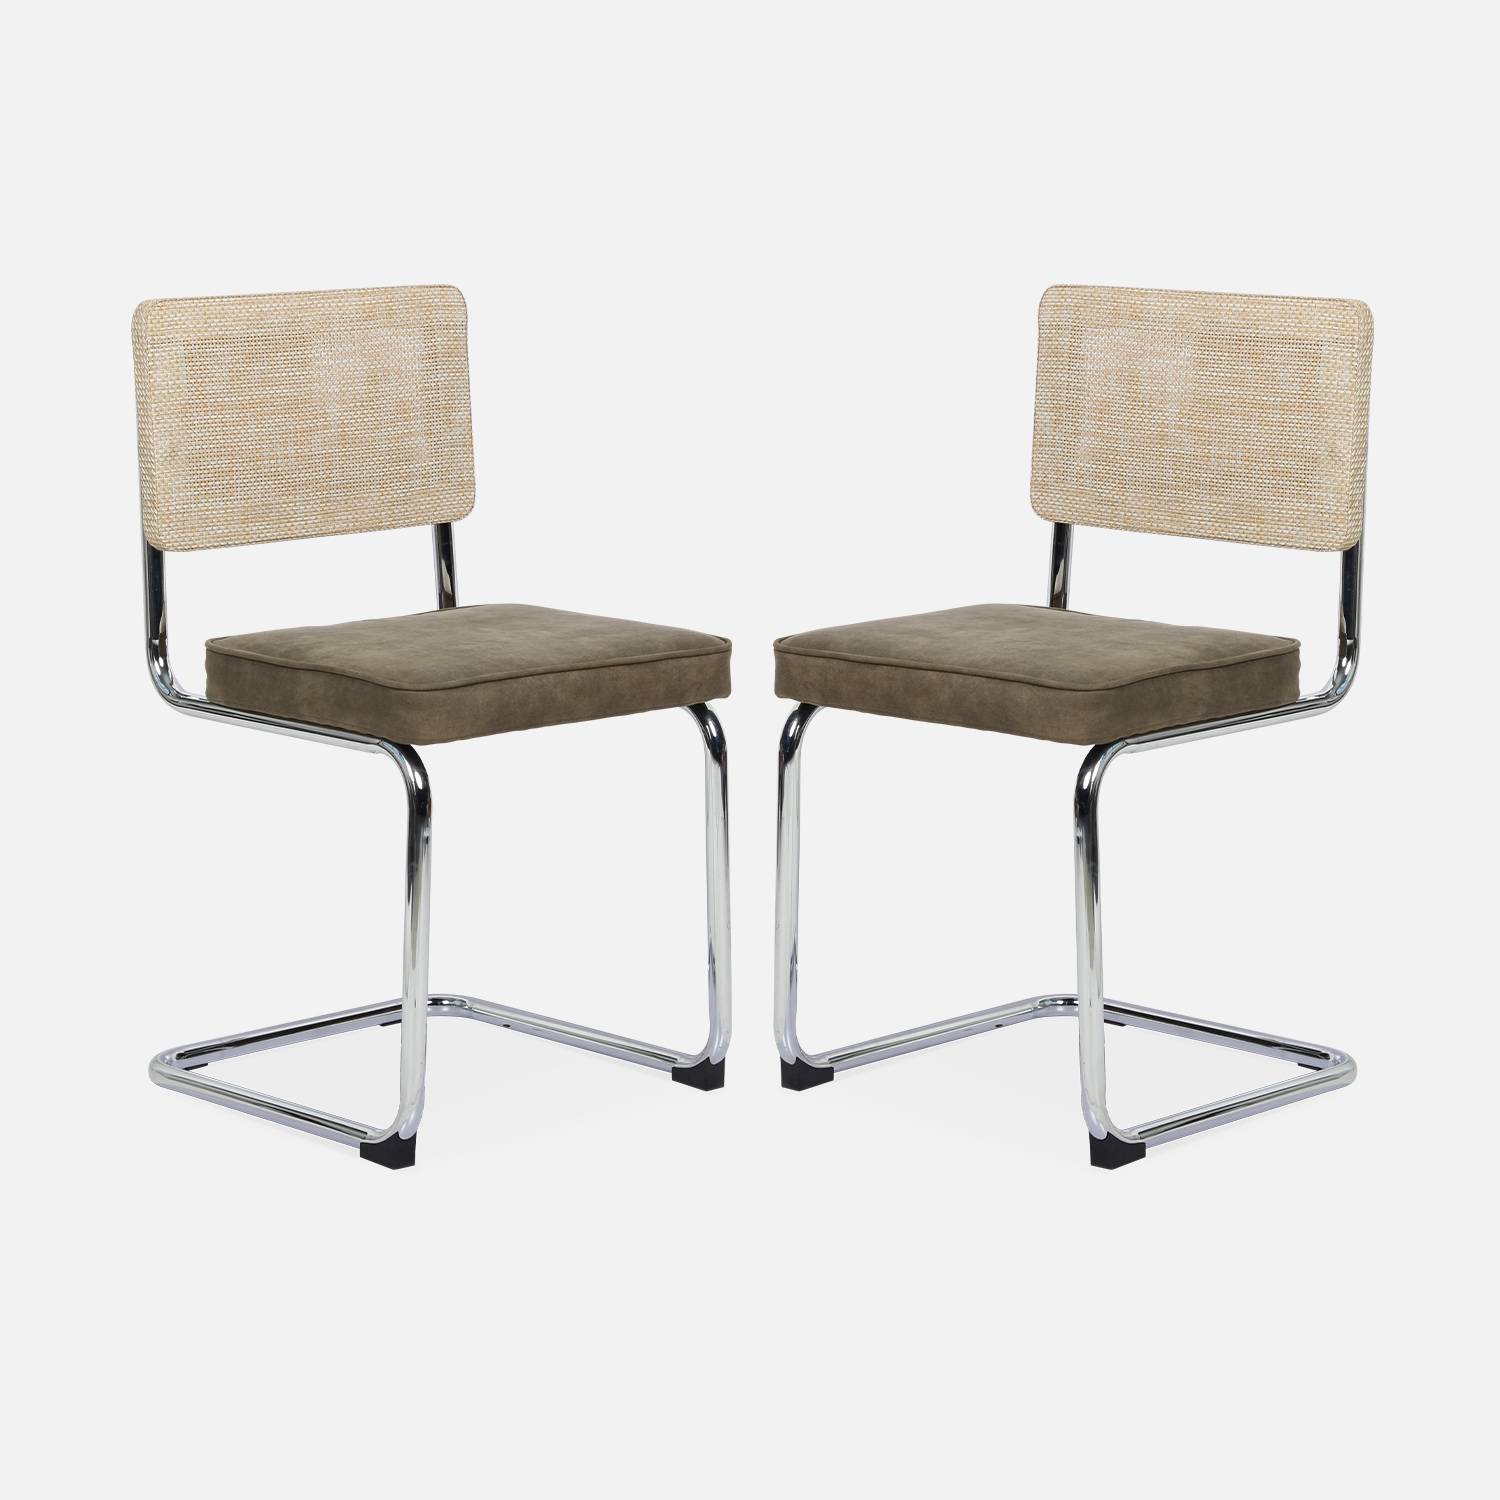 2 sillas cantilever - Maja - tela marrón y resina efecto ratán, 46 x 54,5 x 84,5cm   Photo5